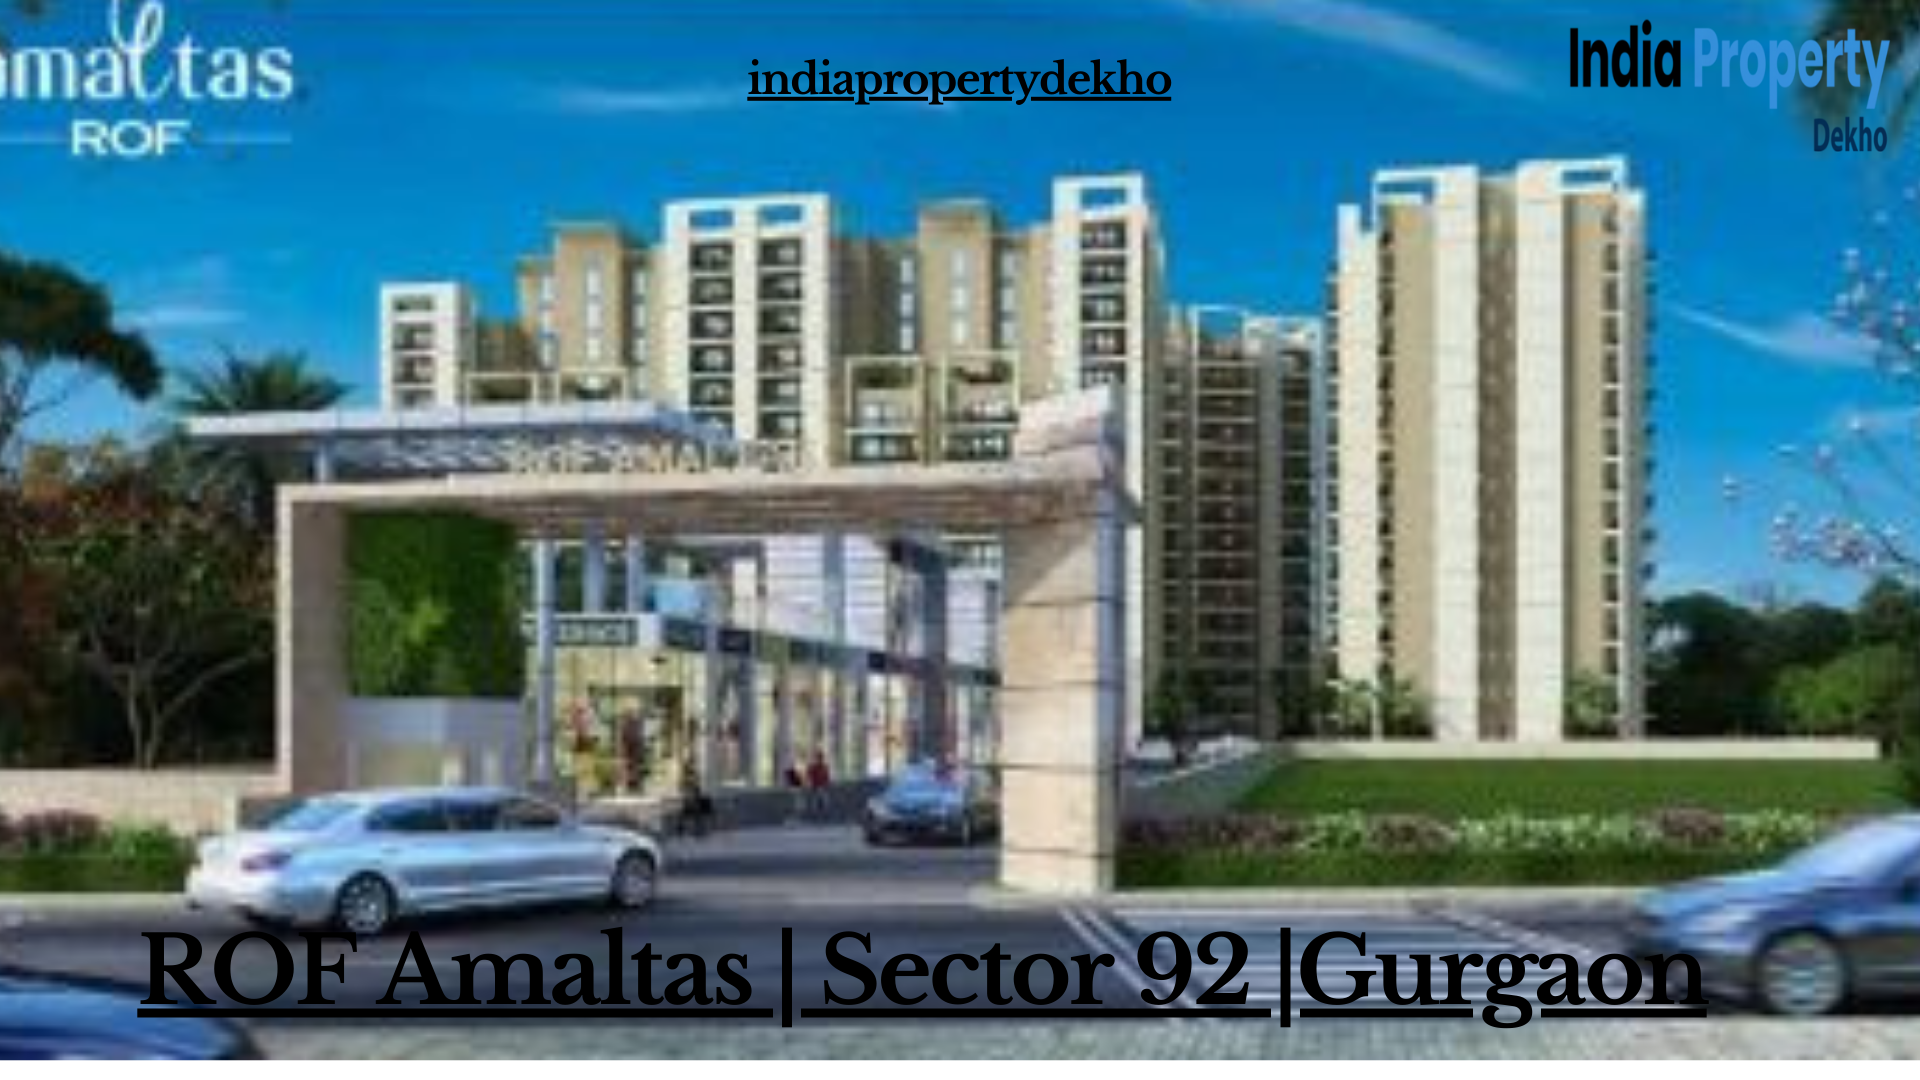  ROF Amaltas |  Sector 92 |Gurgaon